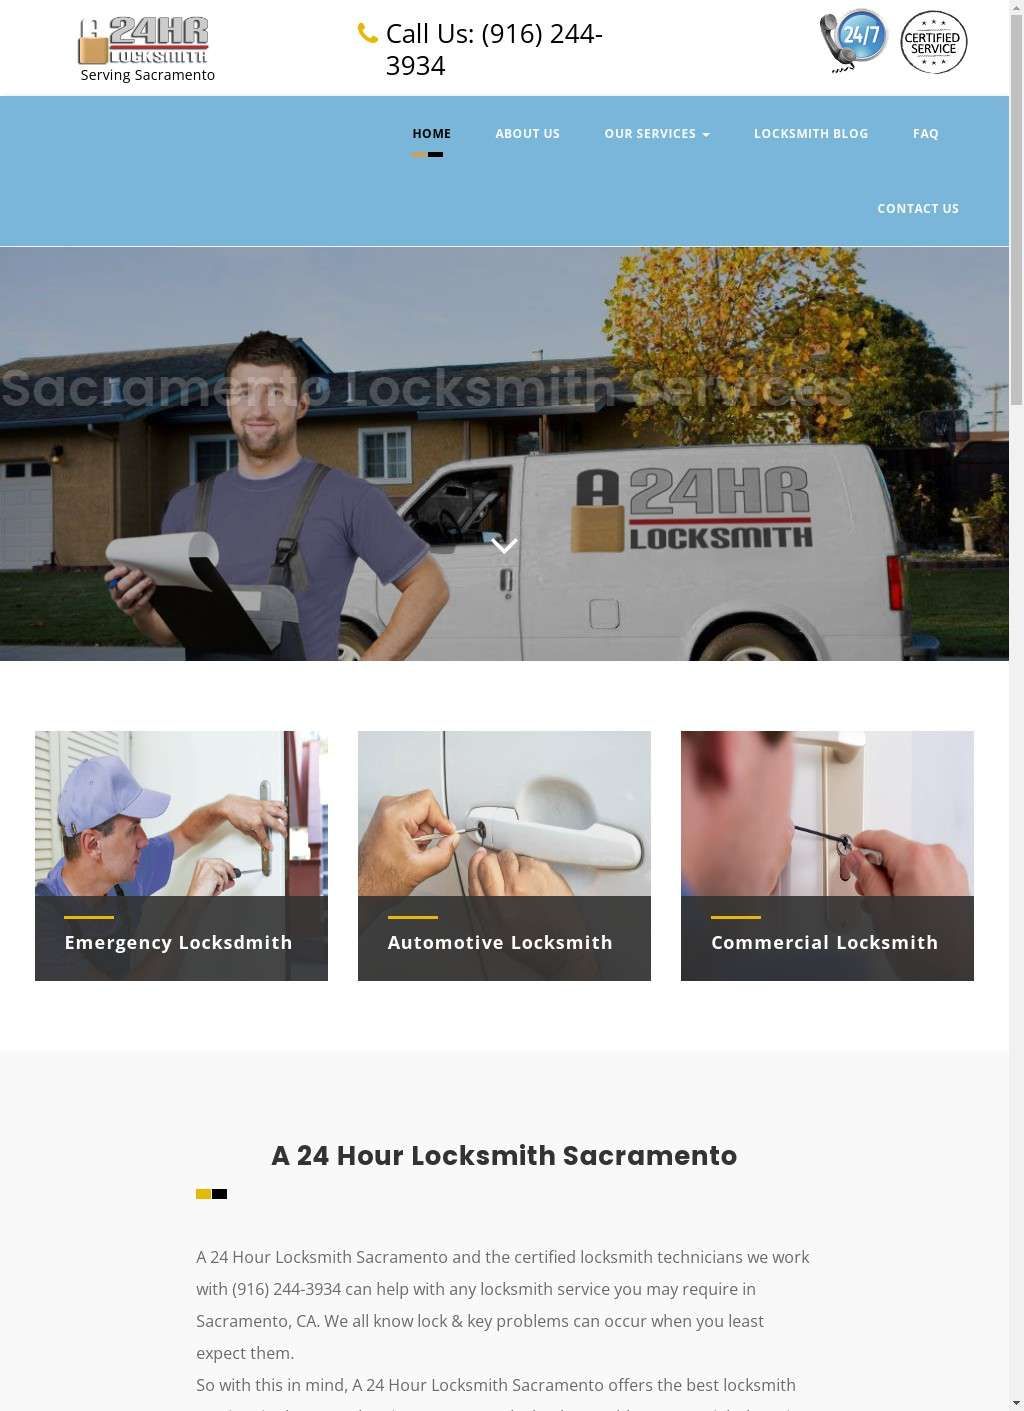 Expert Locksmith Solutions in Sacramento, CA - A 24hr Locksmith